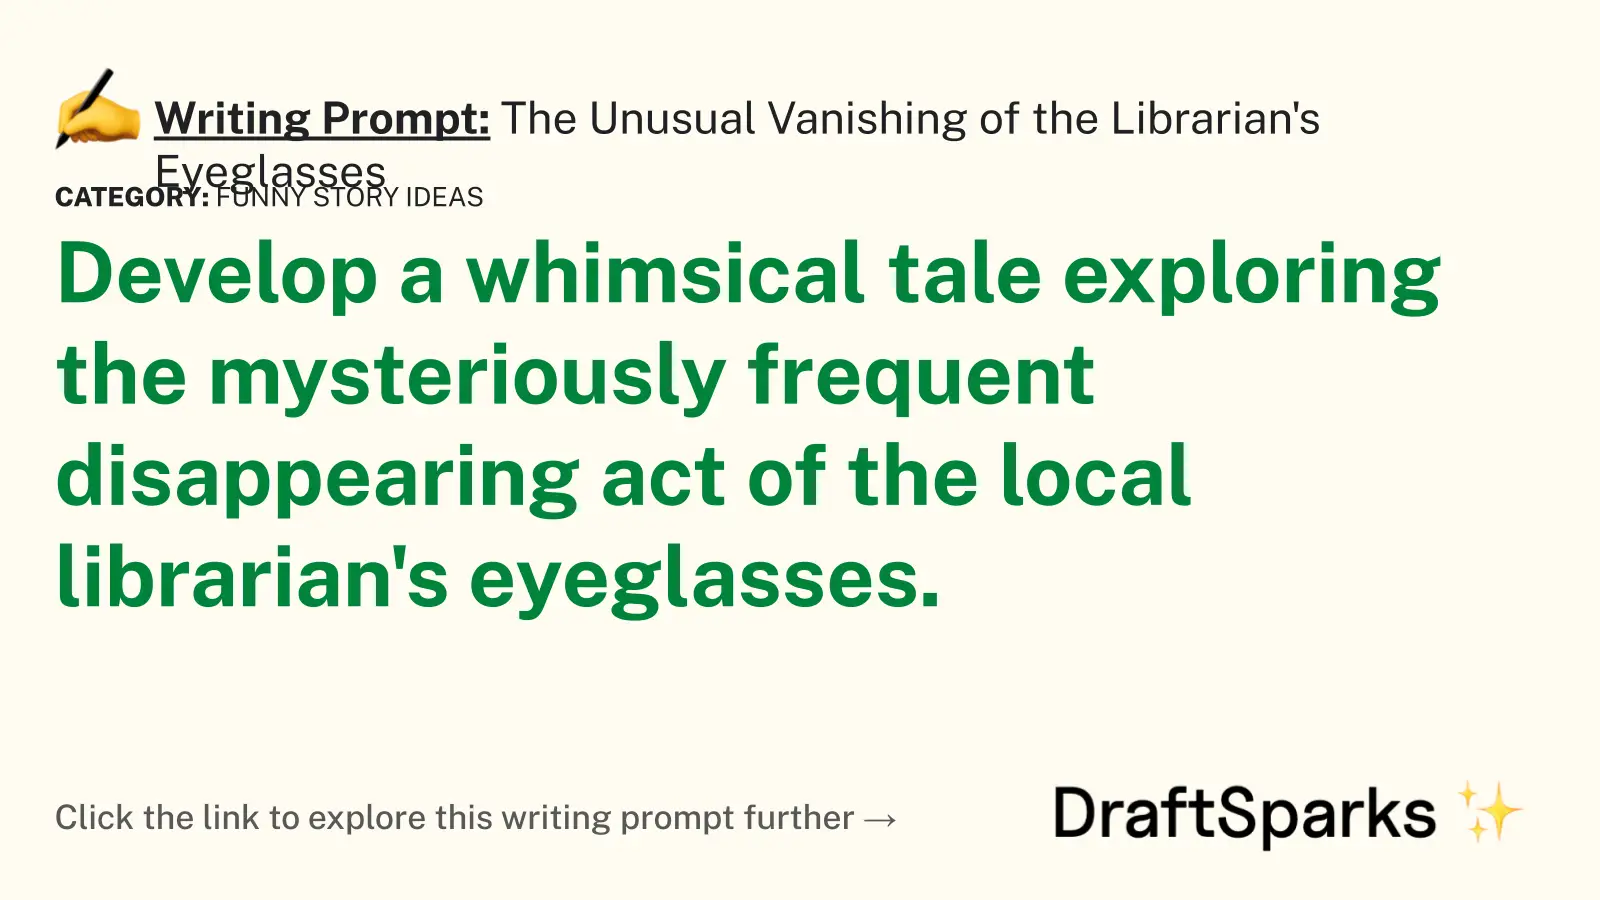 The Unusual Vanishing of the Librarian’s Eyeglasses